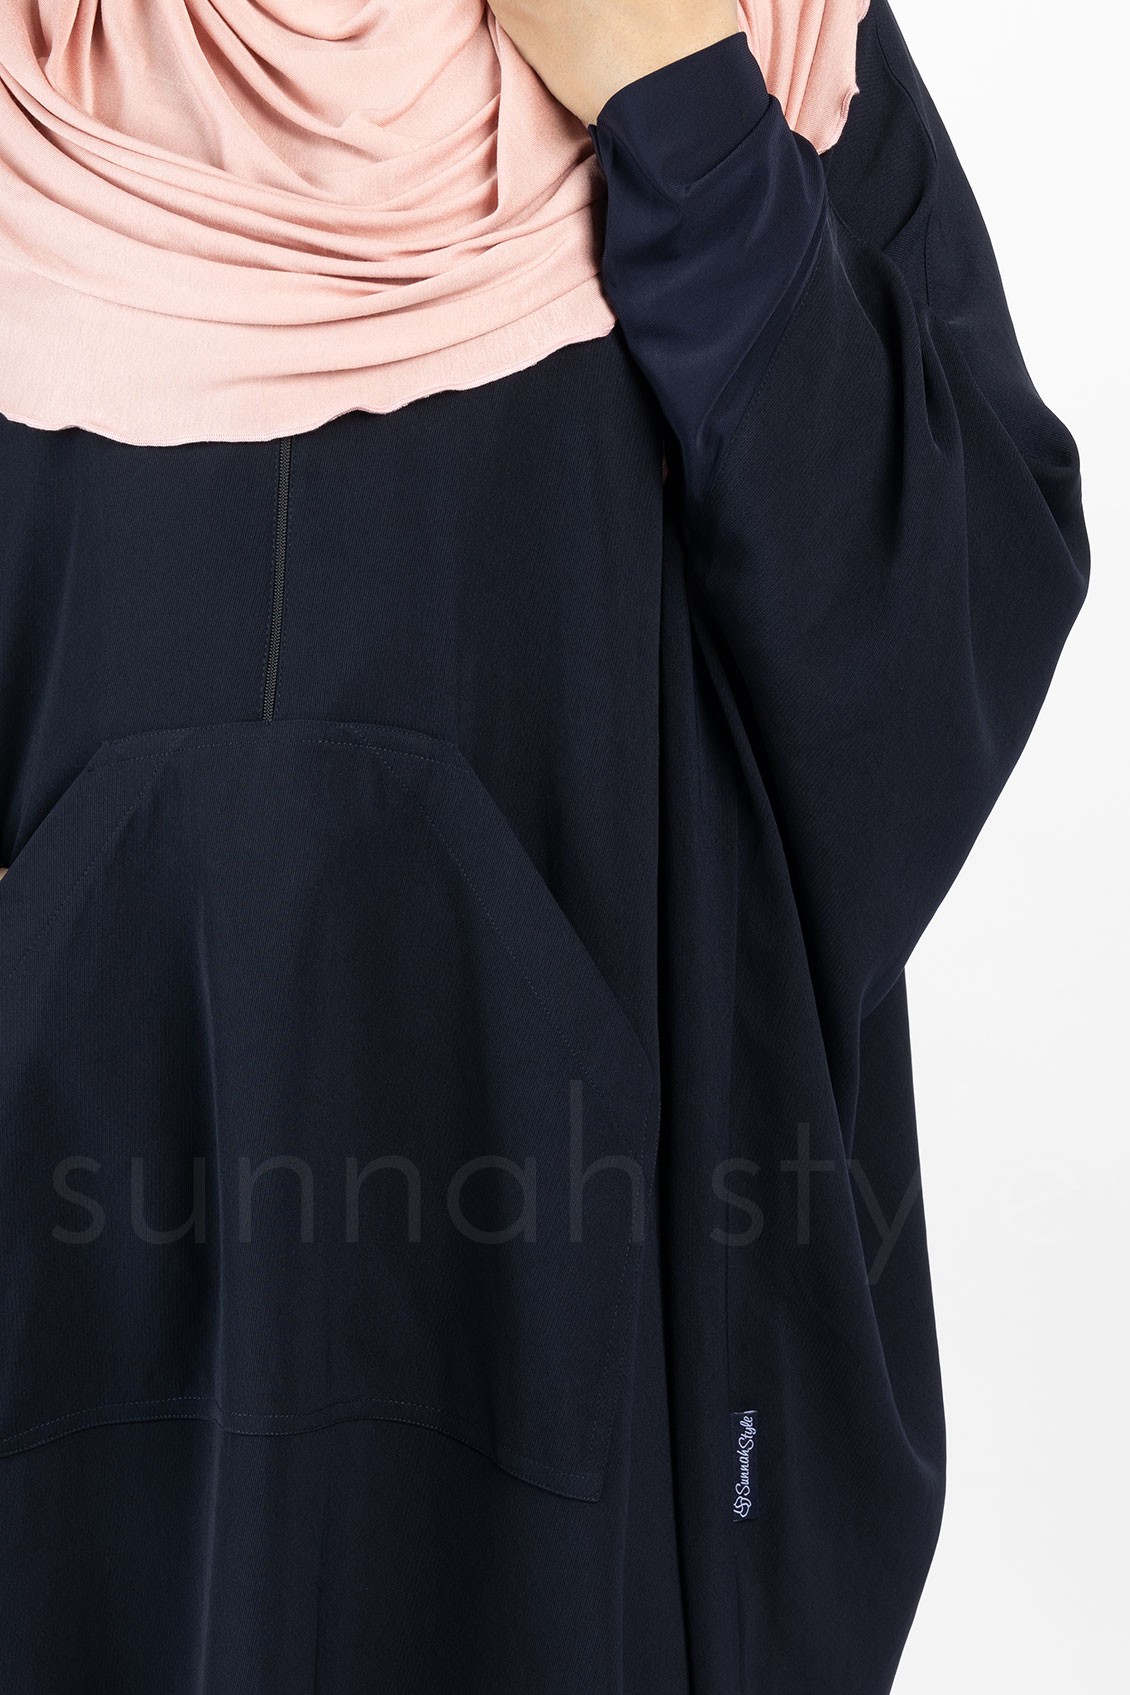 Sunnah Style Essentials Bisht Comfort Abaya (Navy Blue)